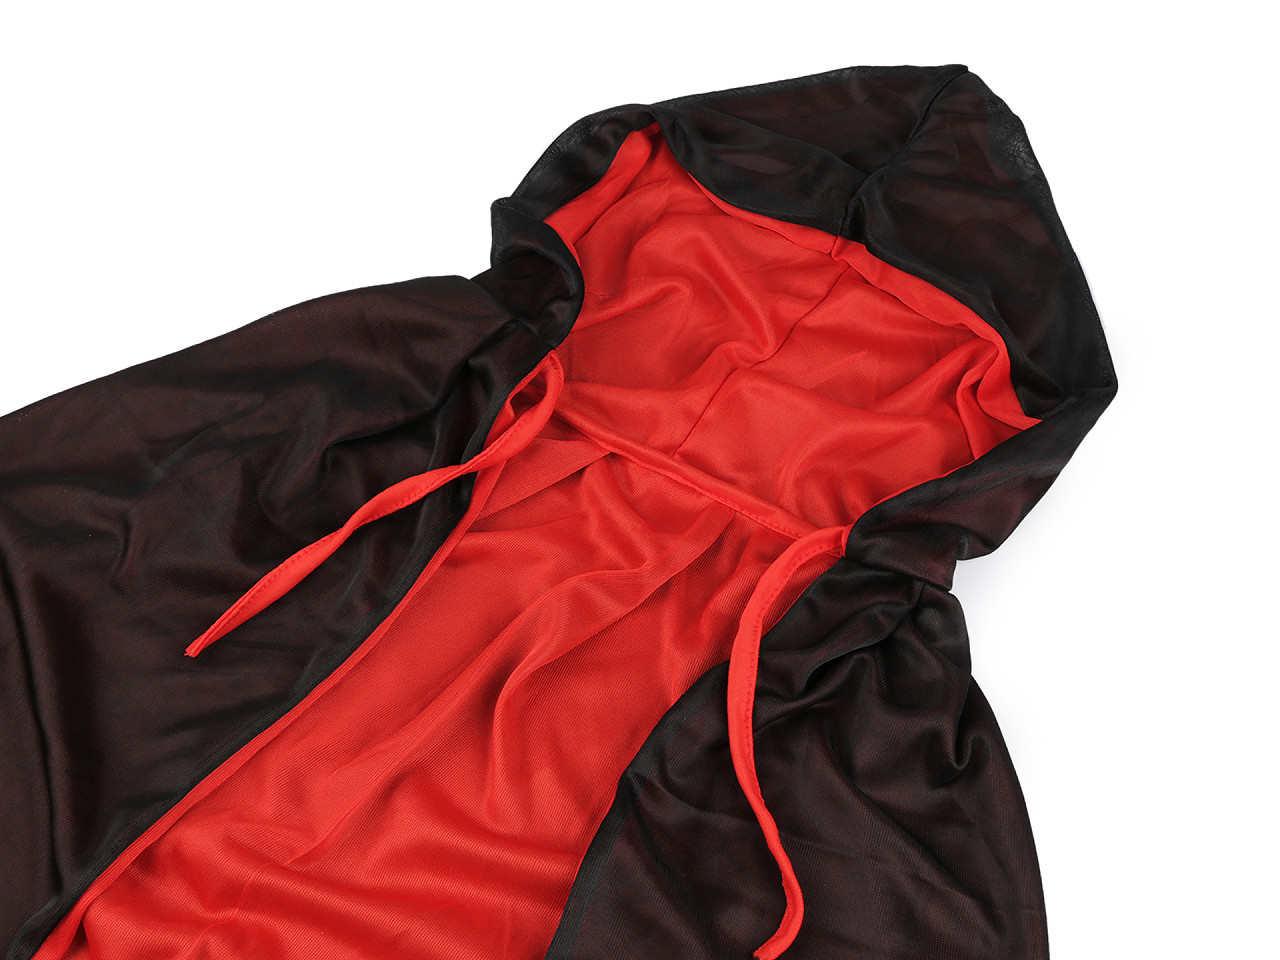 Karnevalový plášť s kapucí, barva 4 (120 cm) černá červená